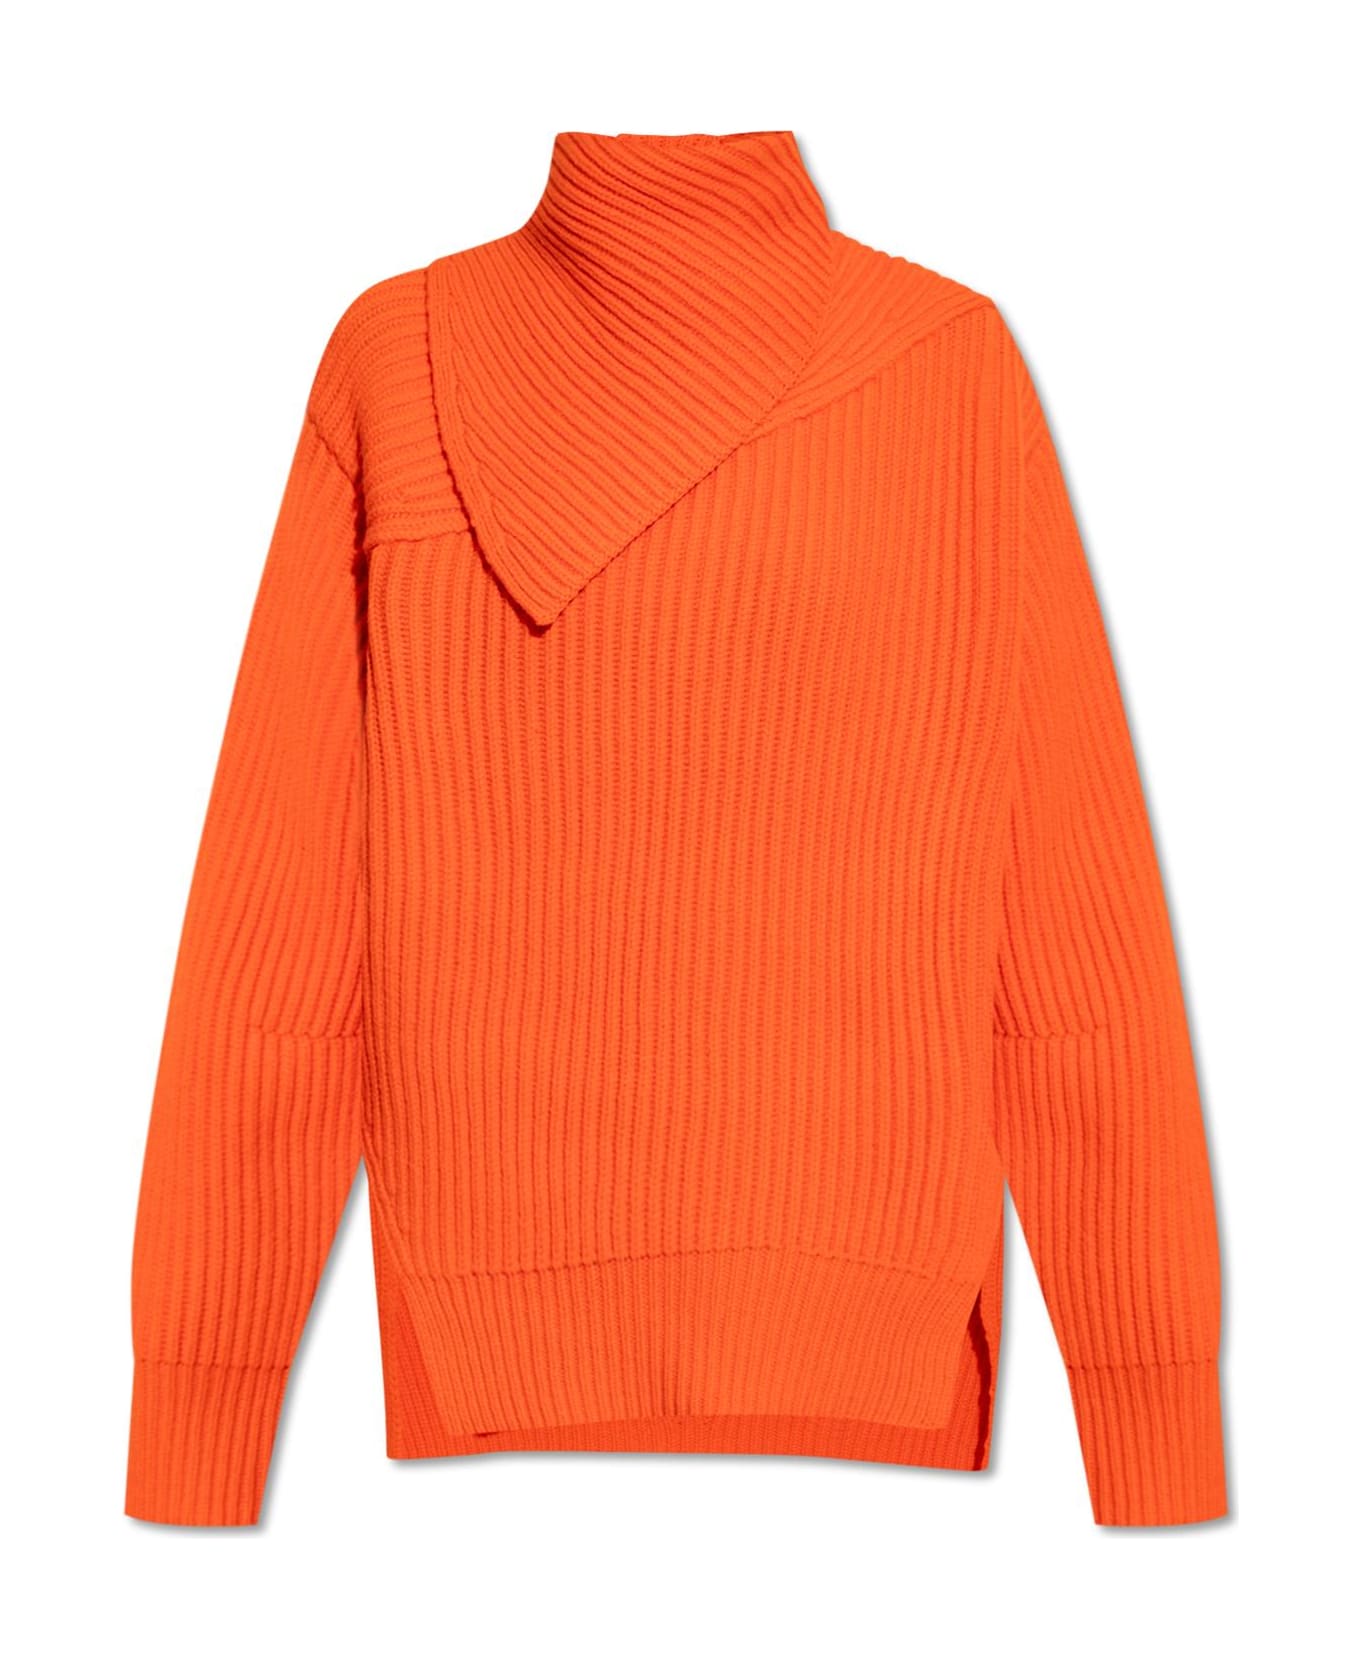 Jil Sander Wool Turtleneck Sweater - ORANGE